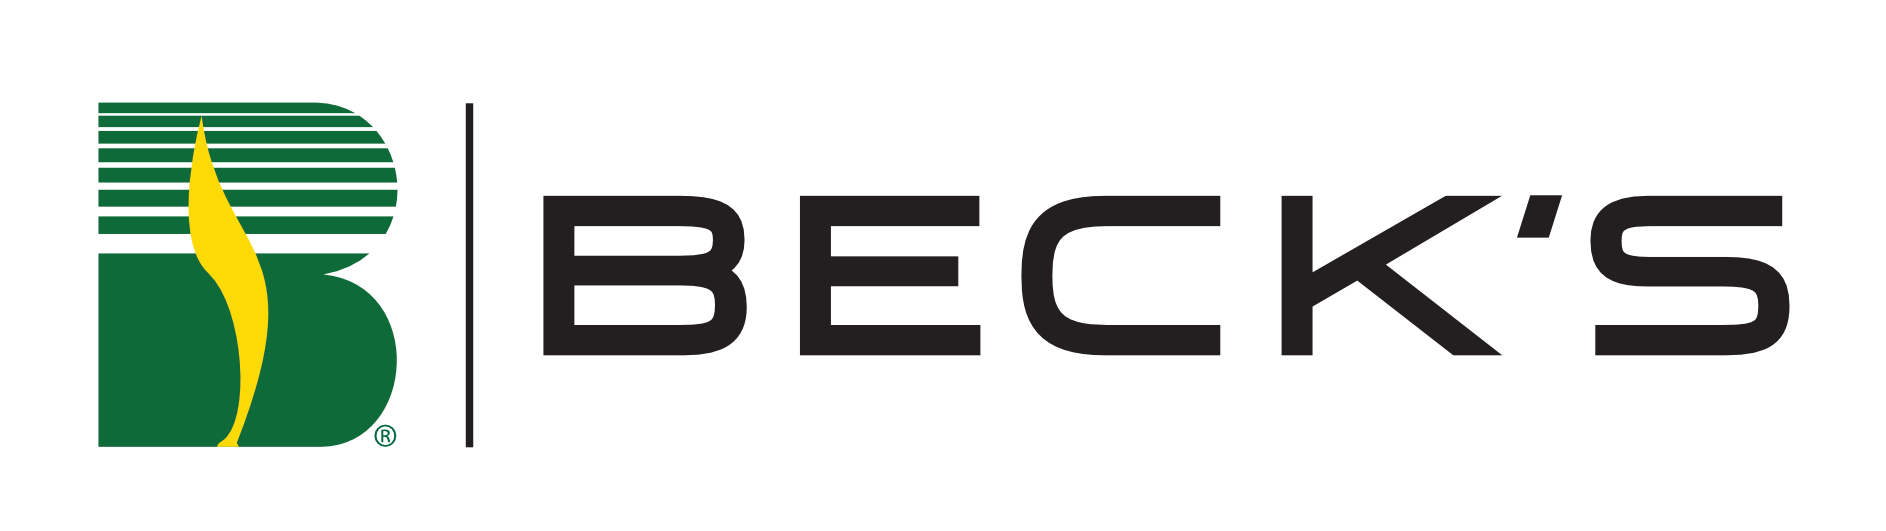 Becks_Logo_2_Horizontal_D_FullColor.png